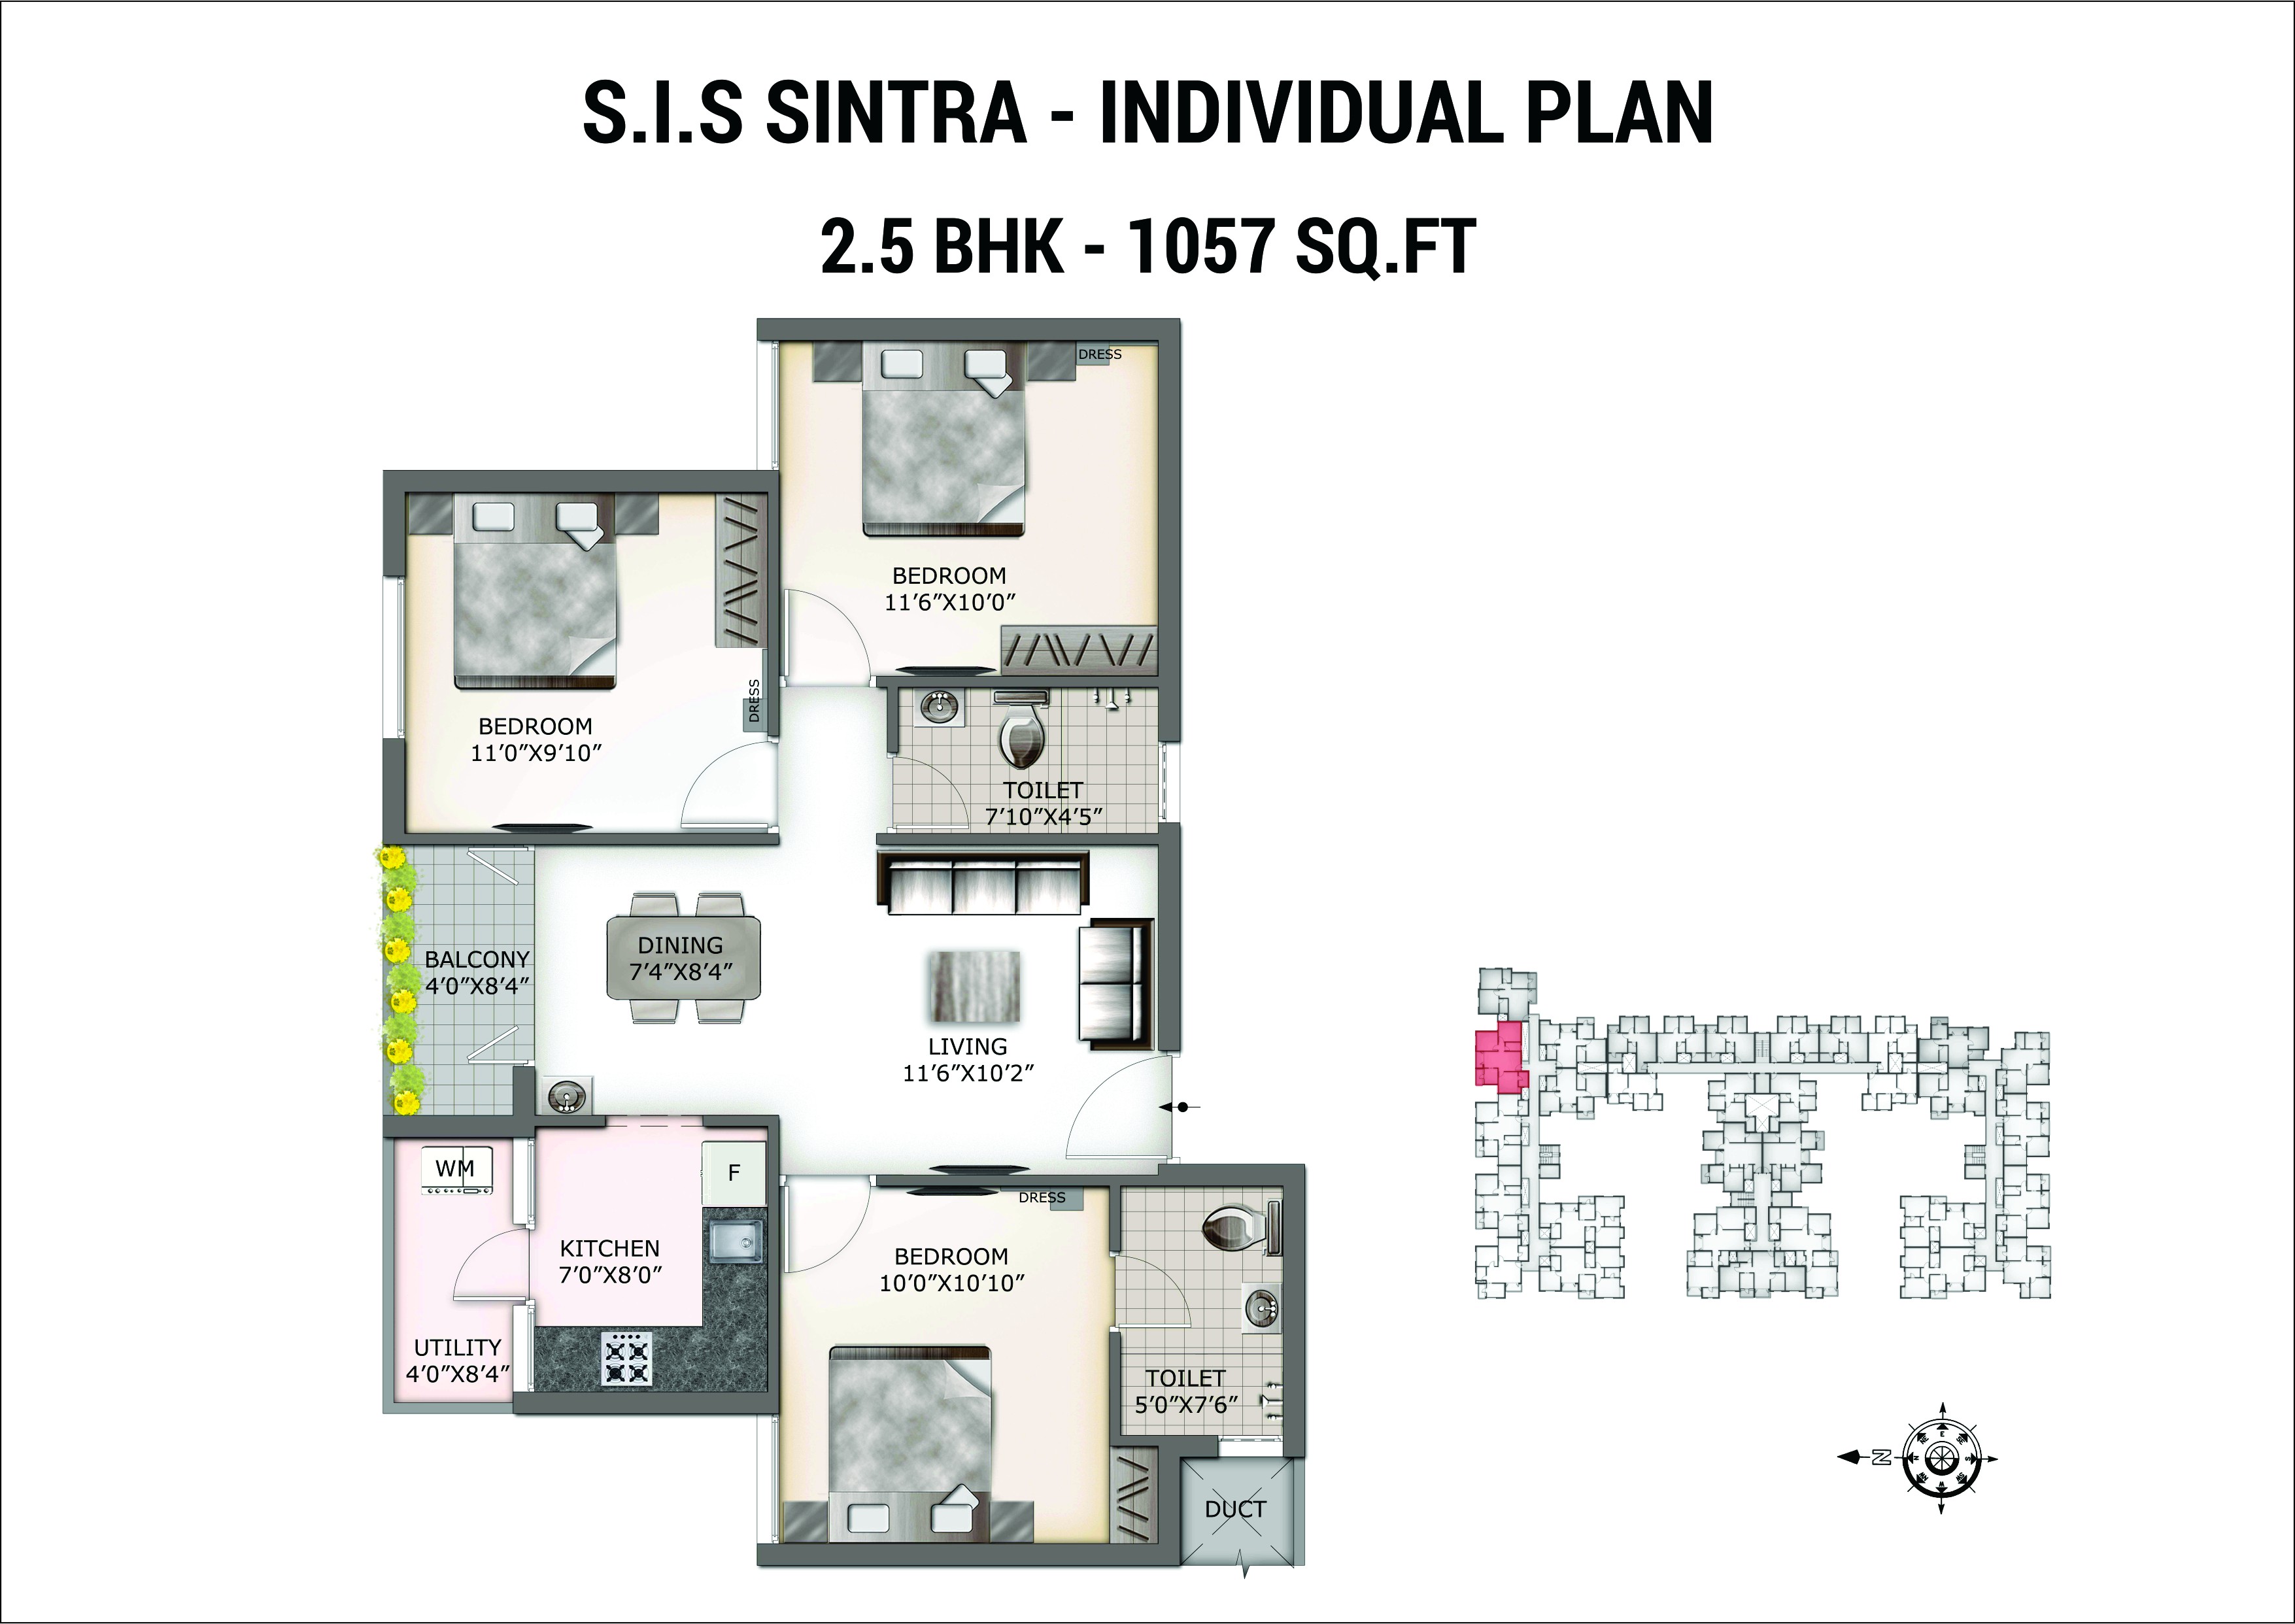 SIS Sintra floorplan 1057sqft south facing